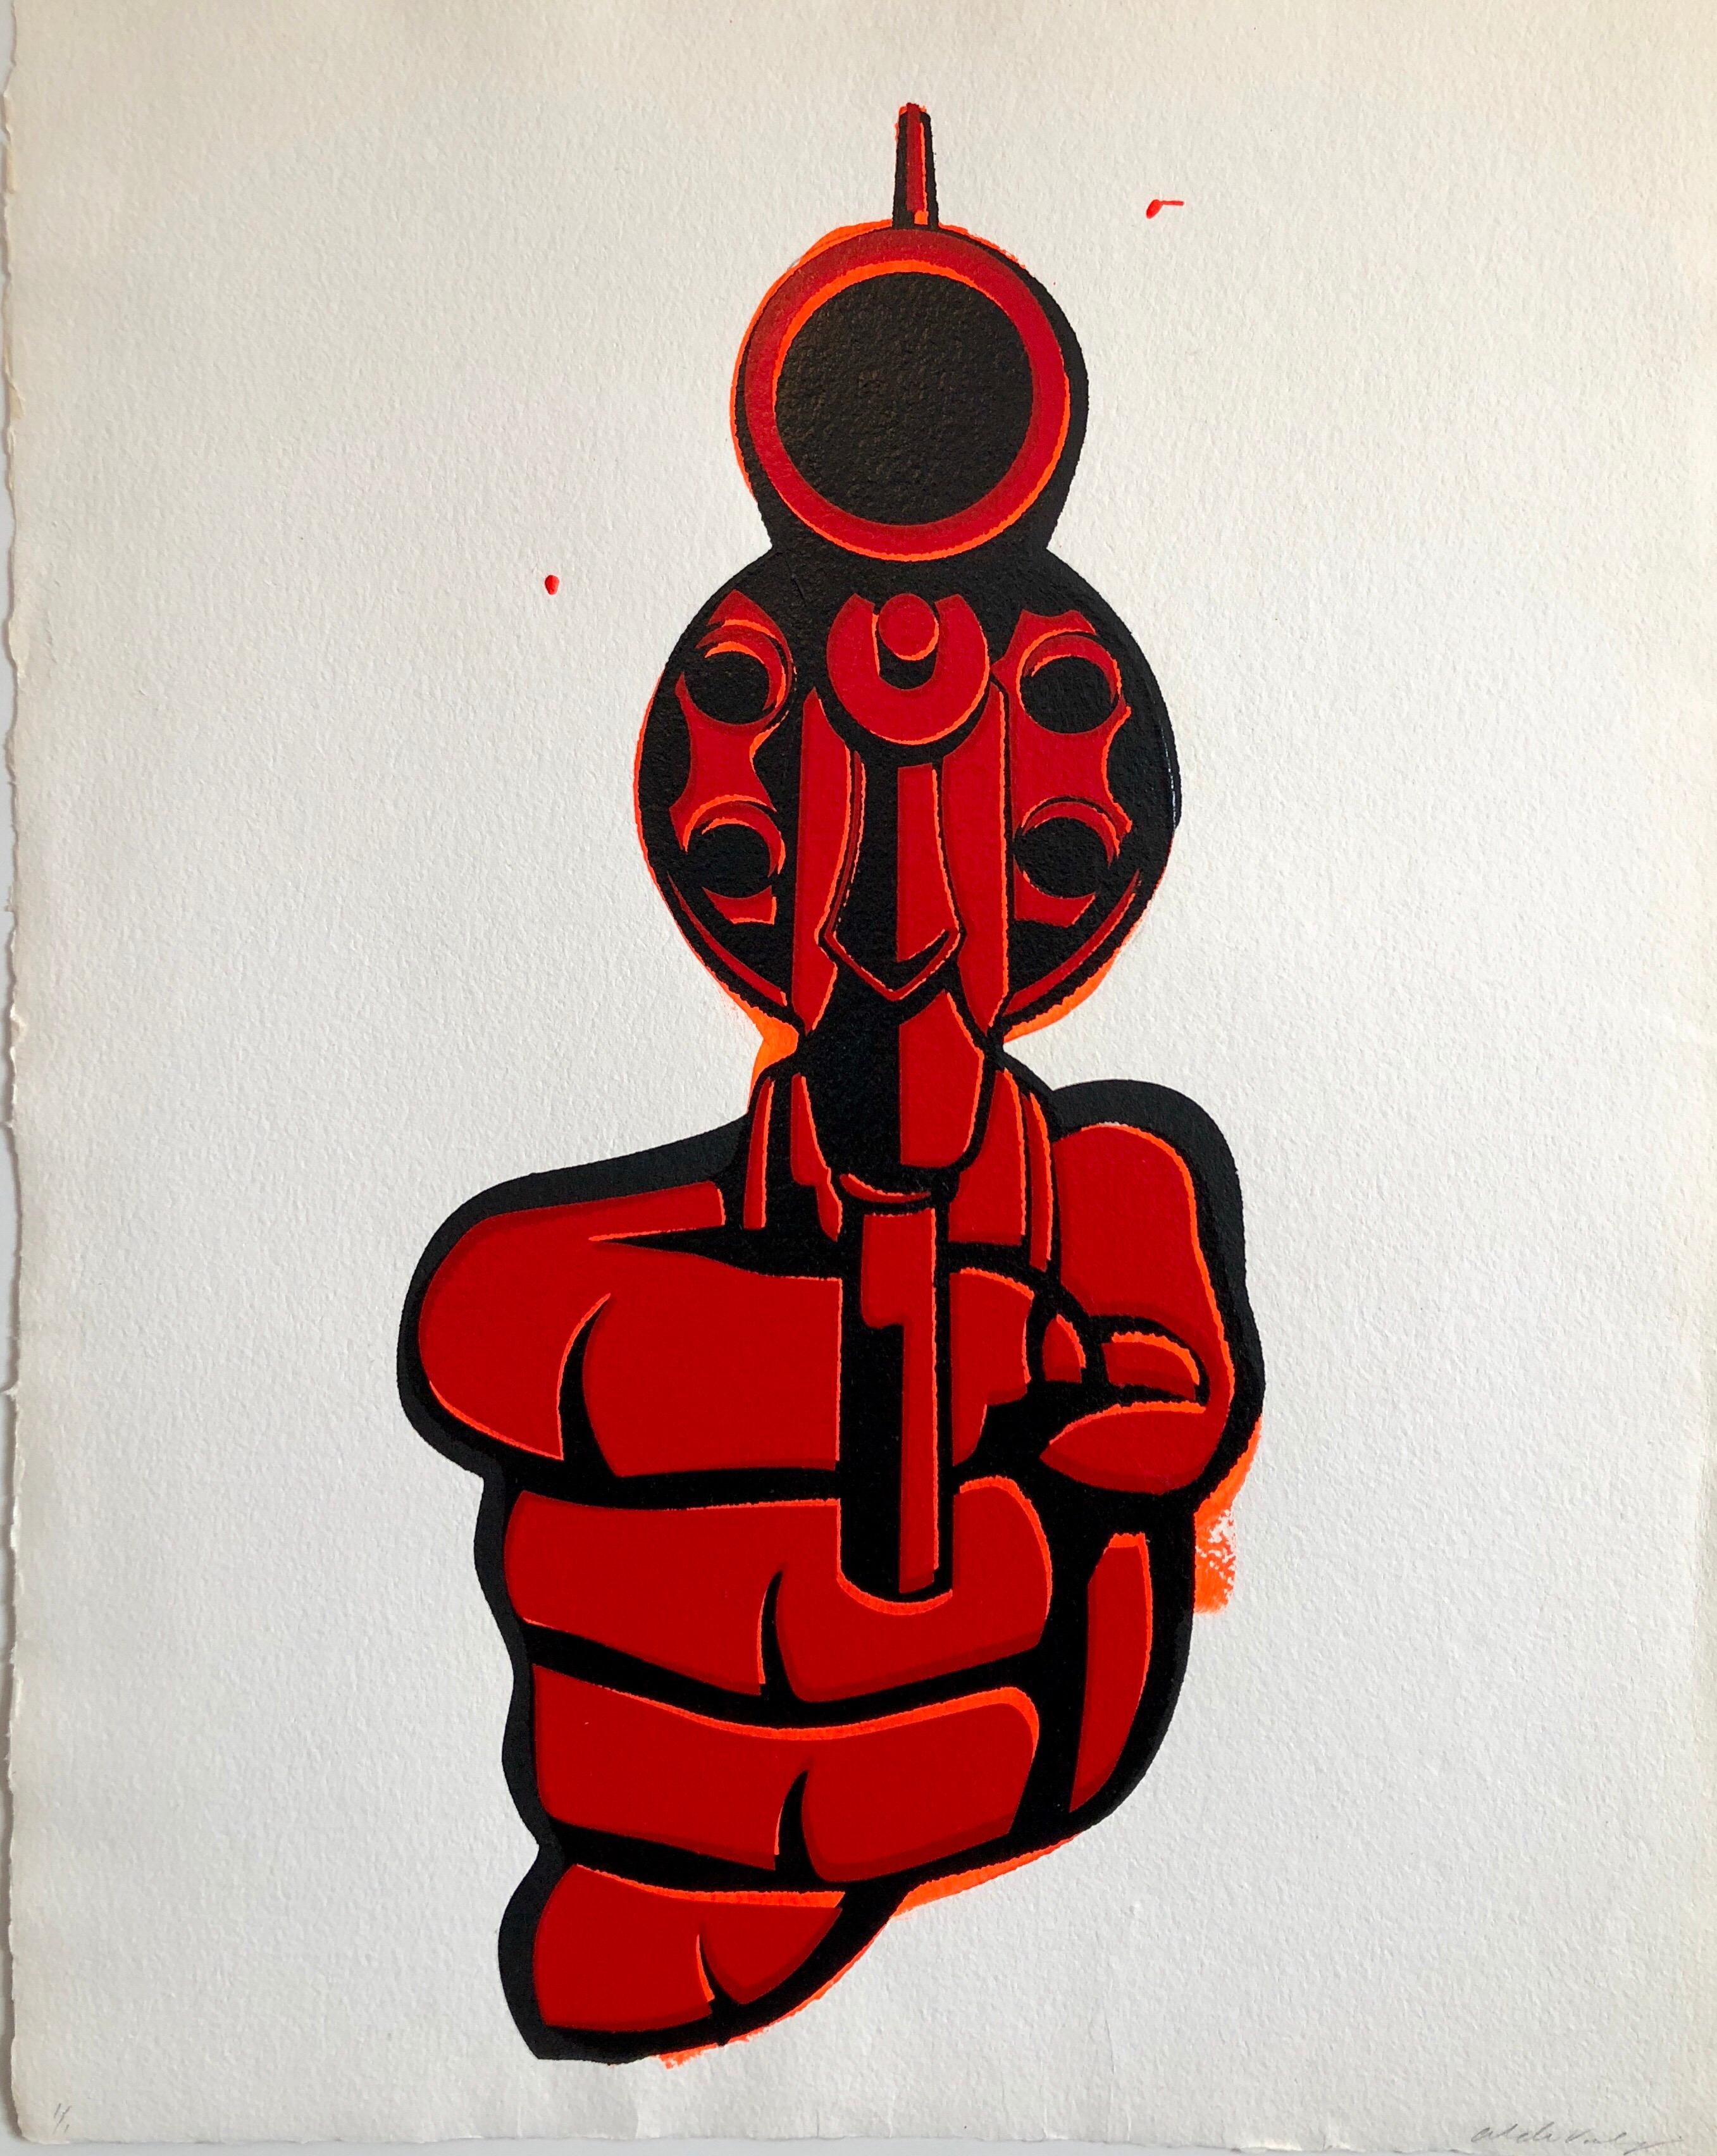 Aldo Valdez Figurative Painting - Street Art Mixed Media Painting "Bang" Graffiti Style California Latino Artist 